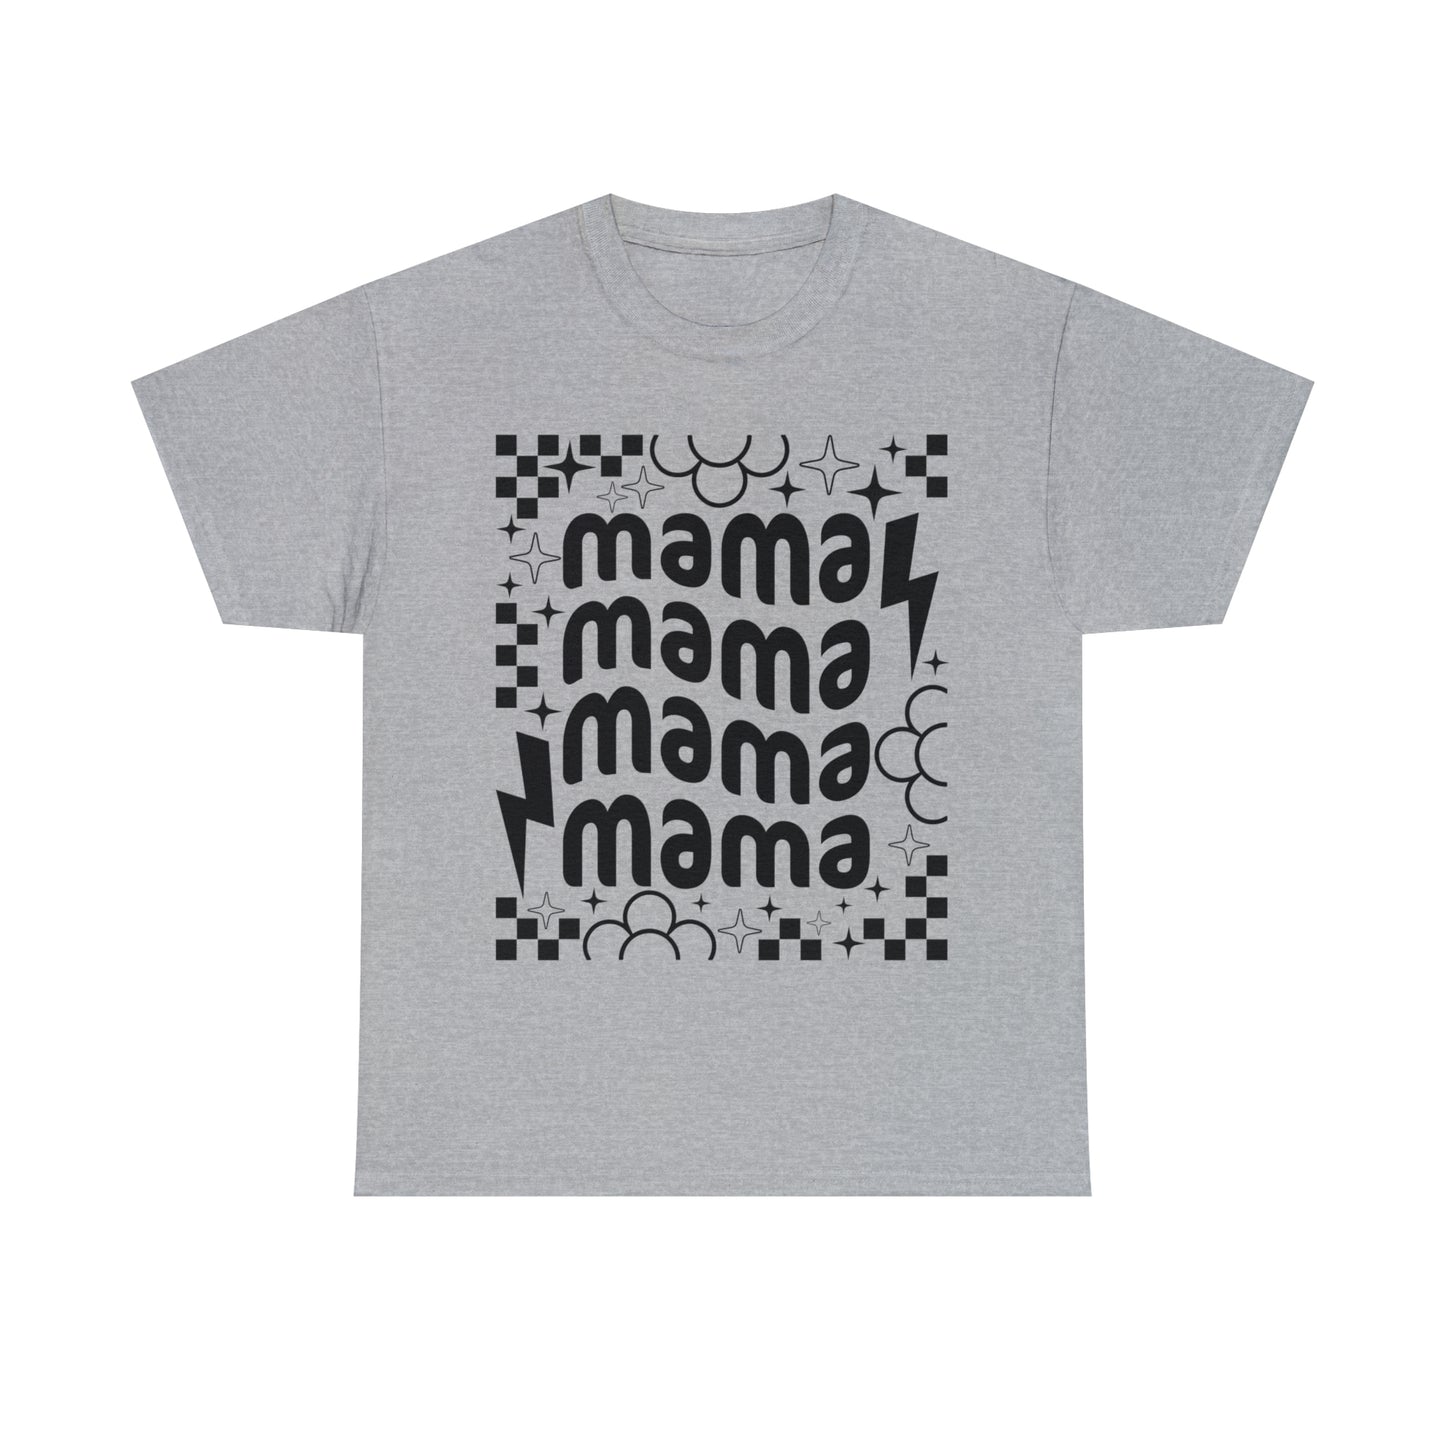 mama, mama, mama, mama  (front)  - Unisex T-shirt